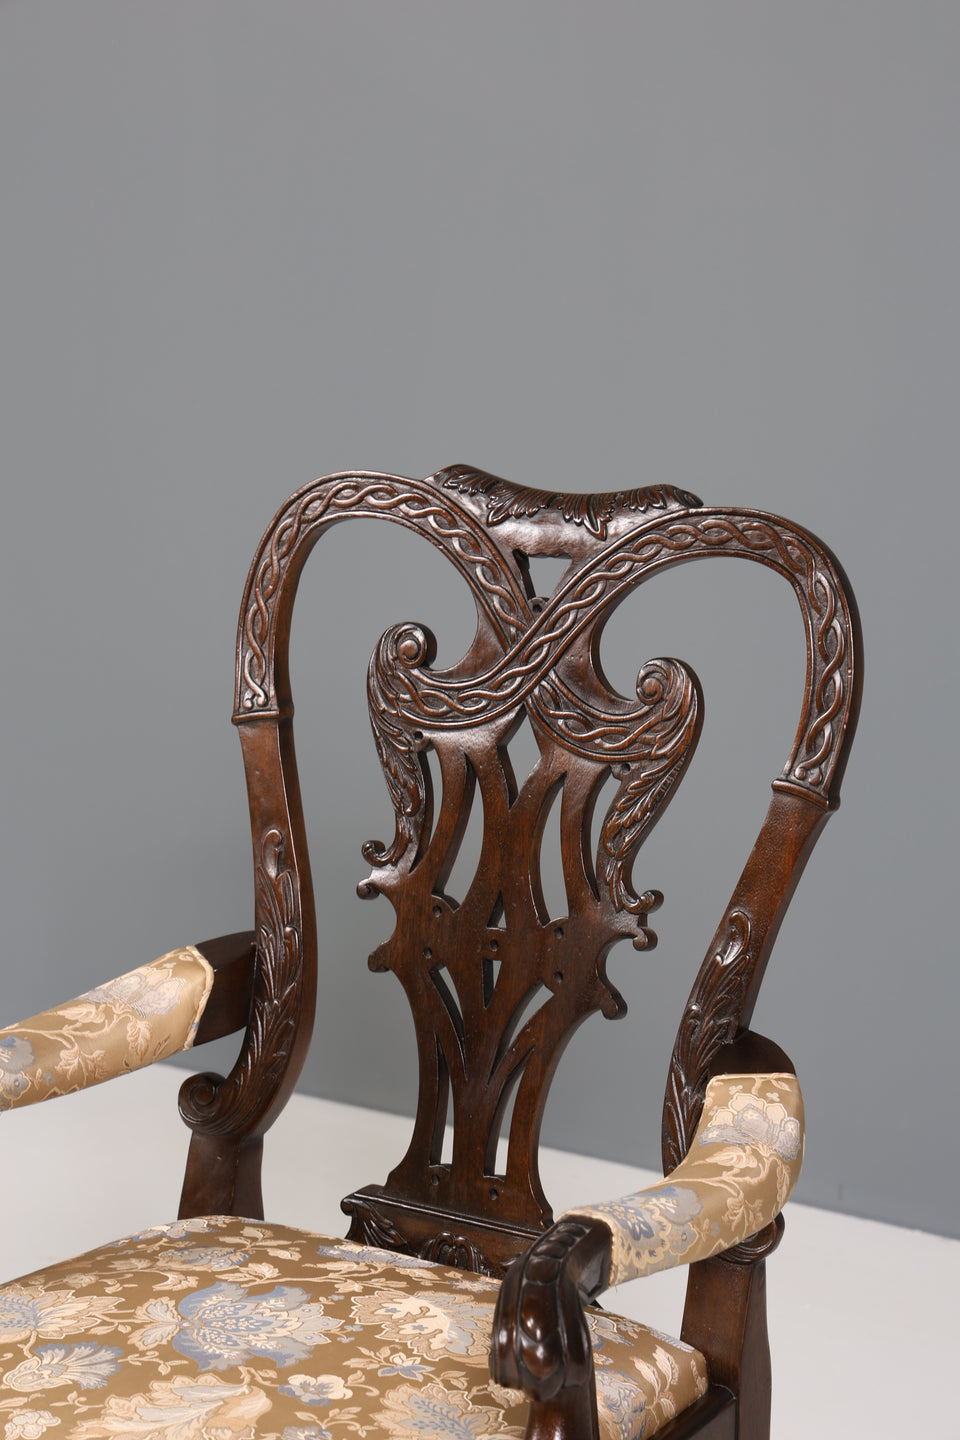 Chippendale Stil Armlehnstuhl Viktorianischer Stil Stuhl 2 von 2